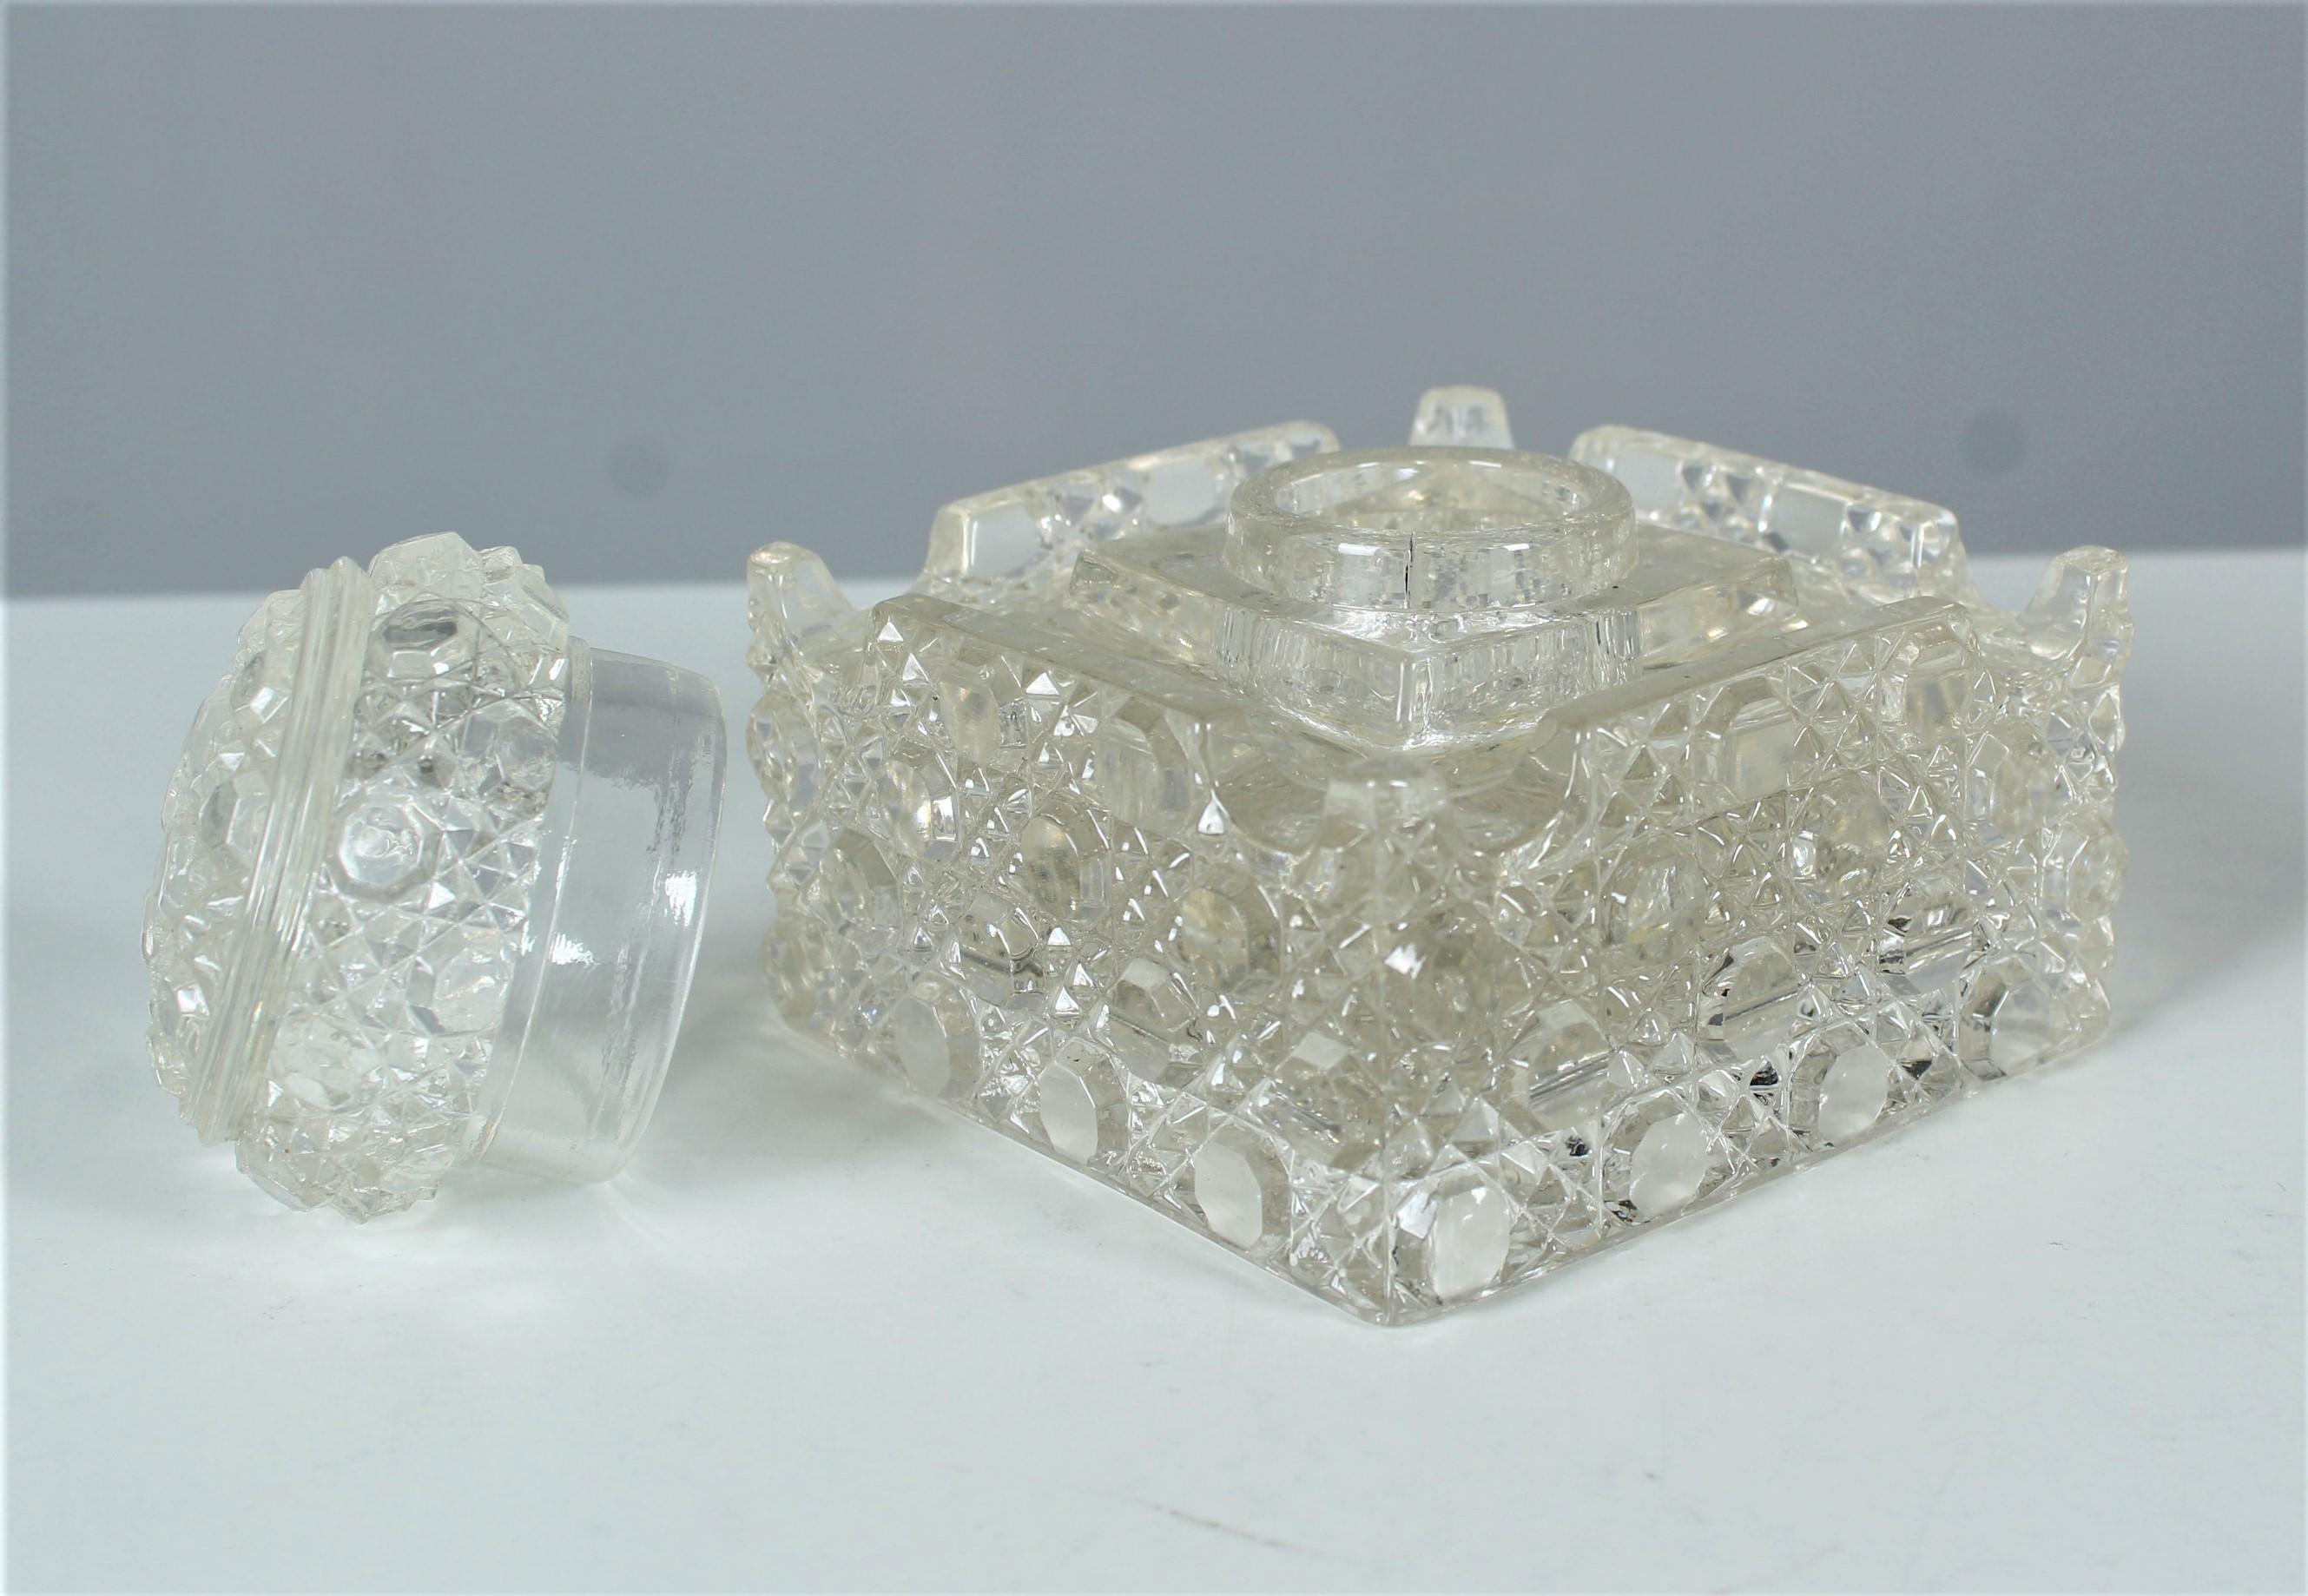 Antique Baccarat Crystal Glass Inkstand, Pen Holder, Desk Utensil, circa 1880 In Good Condition For Sale In Greven, DE